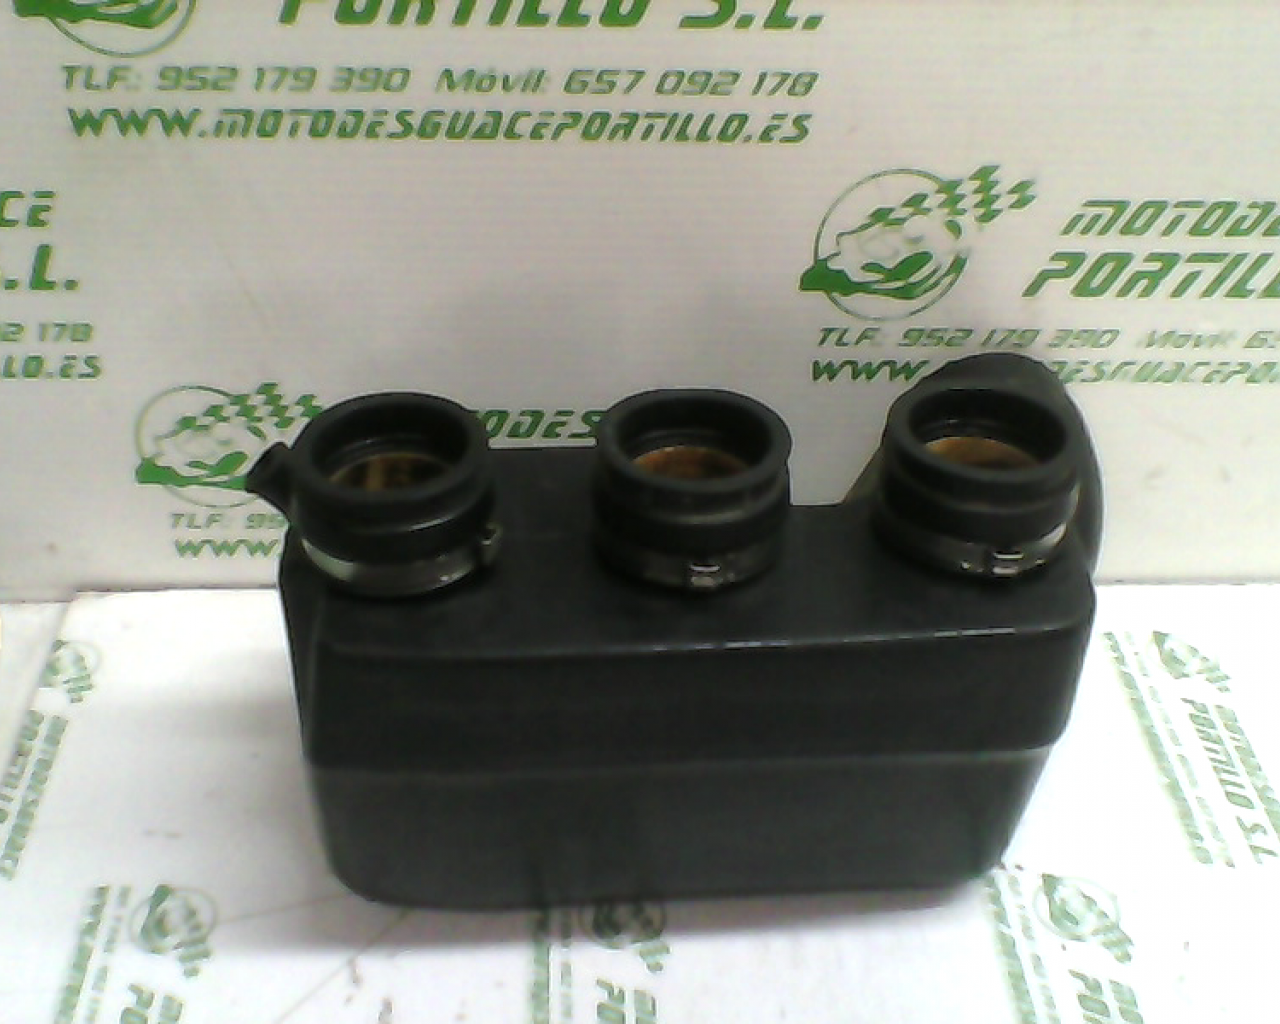 Caja filtro BMW K 75 (1987-1988)